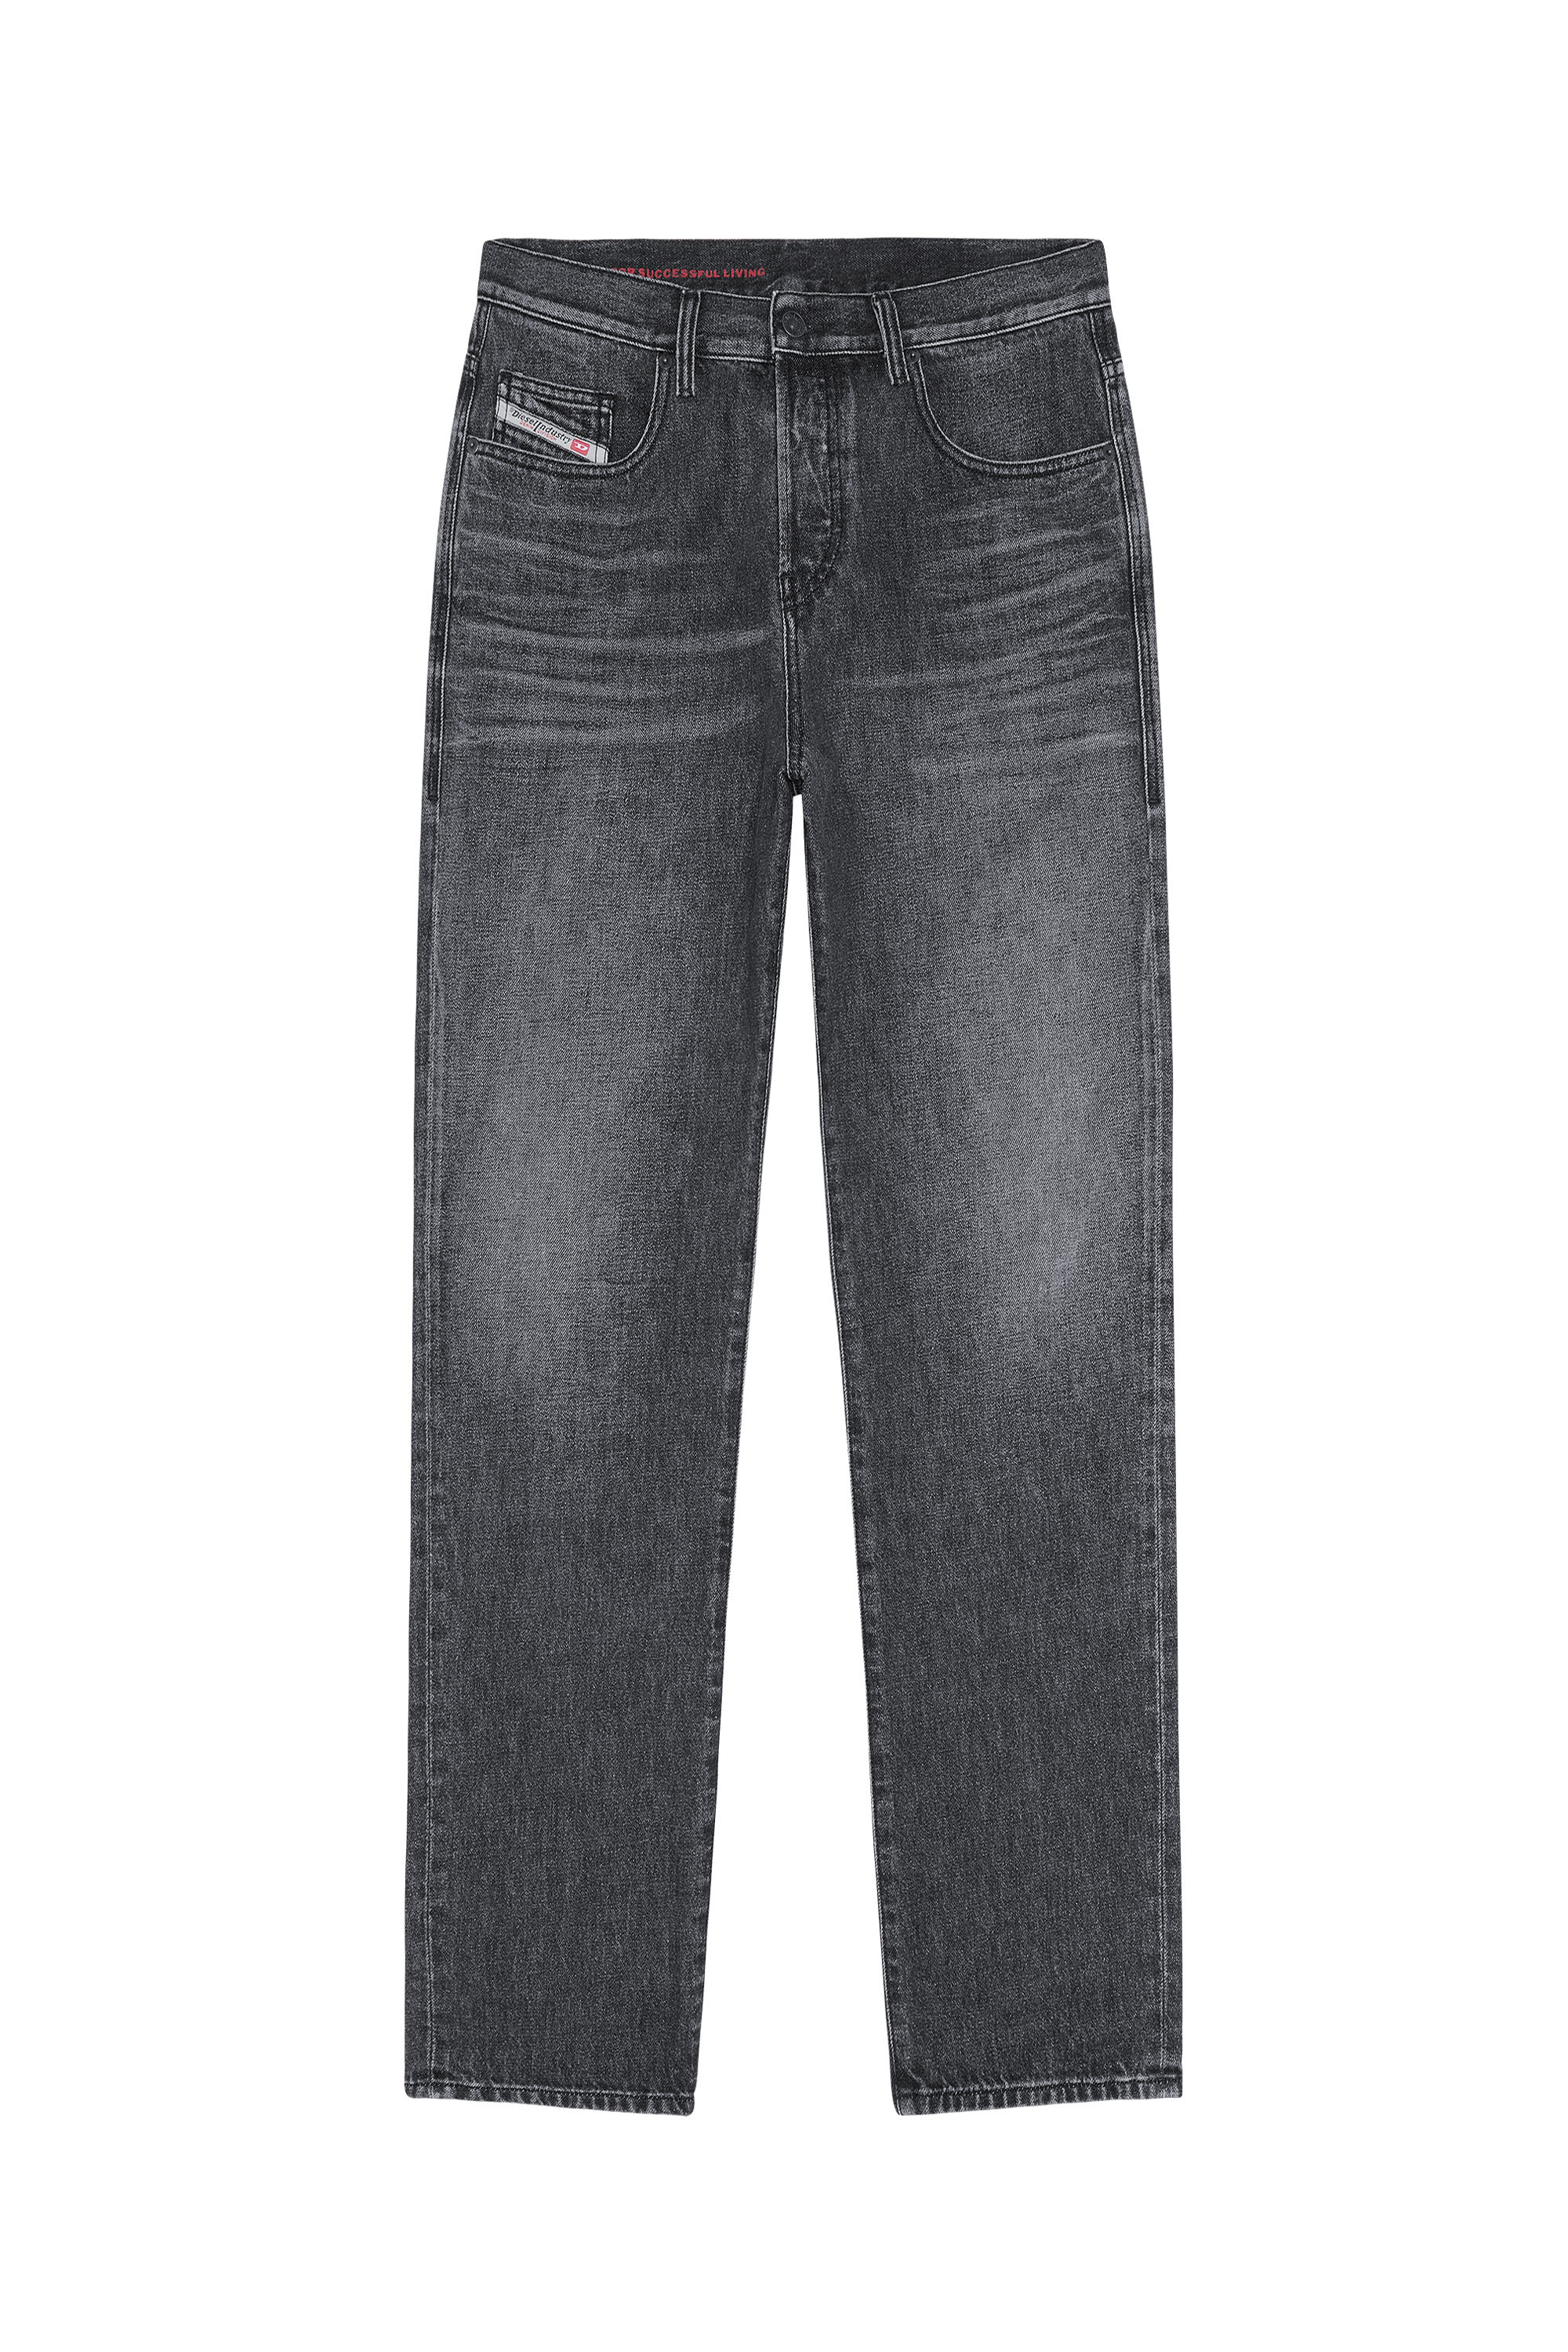 2020 D-VIKER 007C4 Straight Jeans, Schwarz/Dunkelgrau - Jeans